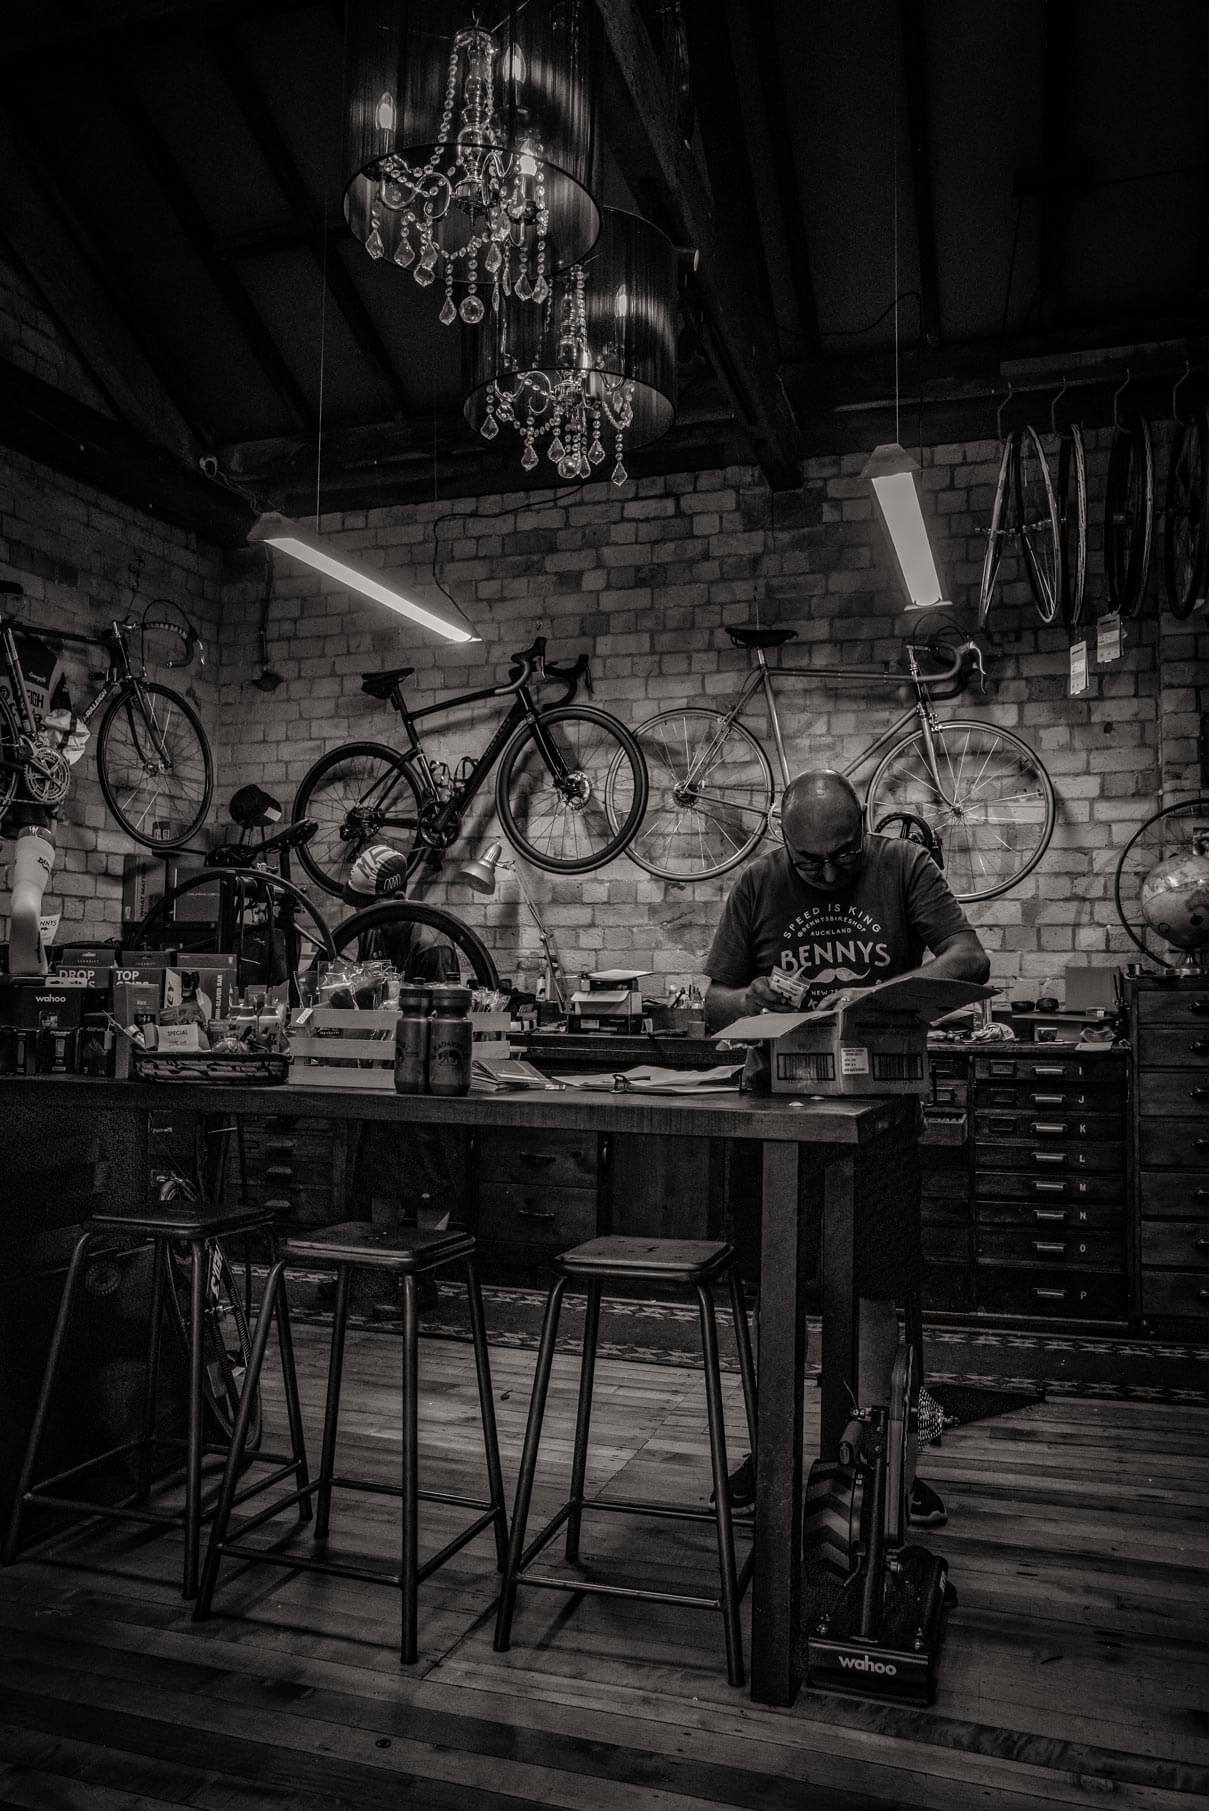 Benny's Bike Shop, Eden Terrace, Auckland